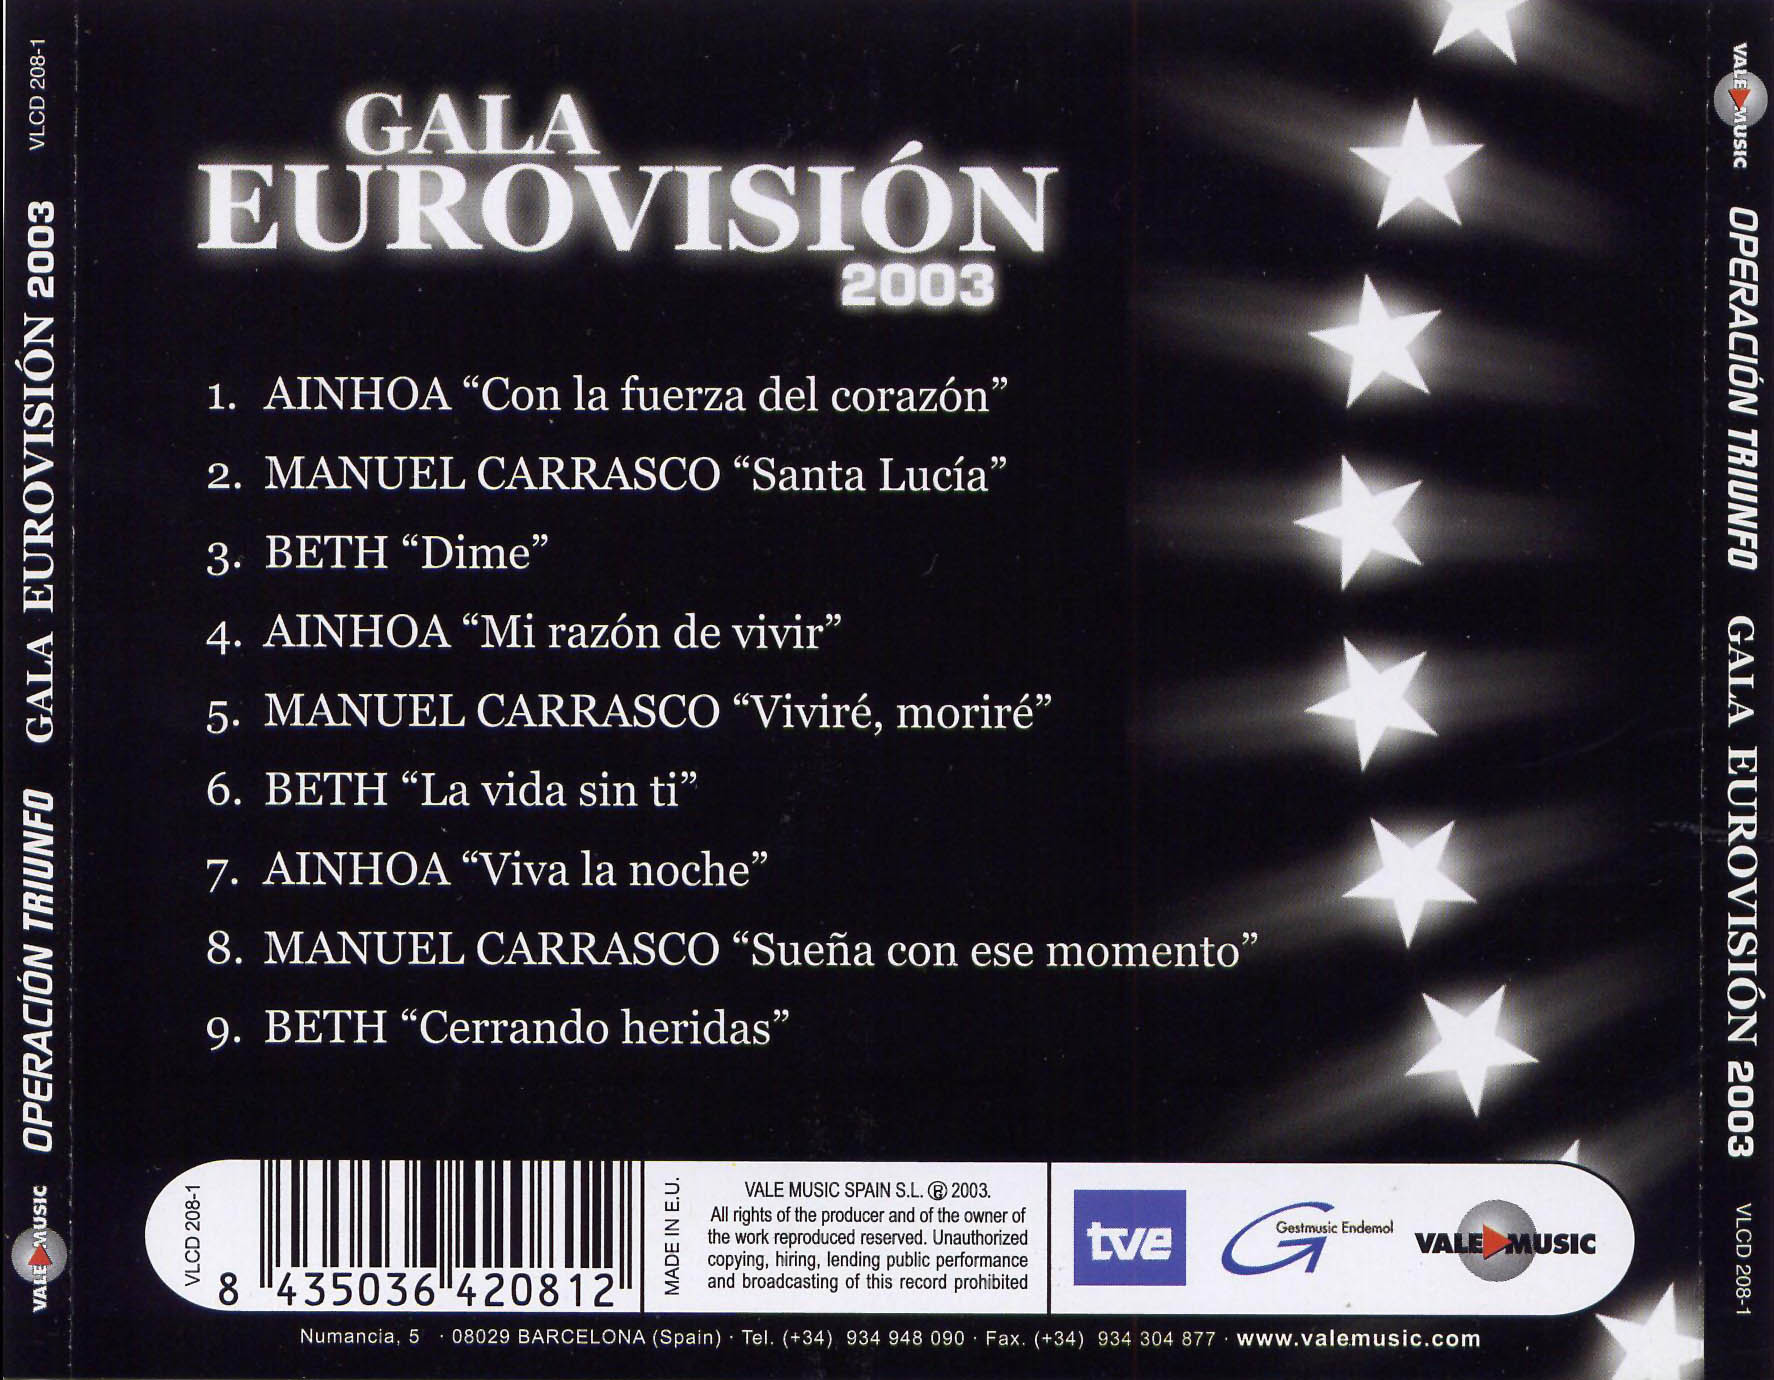 Cartula Trasera de Operacion Triunfo 2002-2003 Gala Eurovision